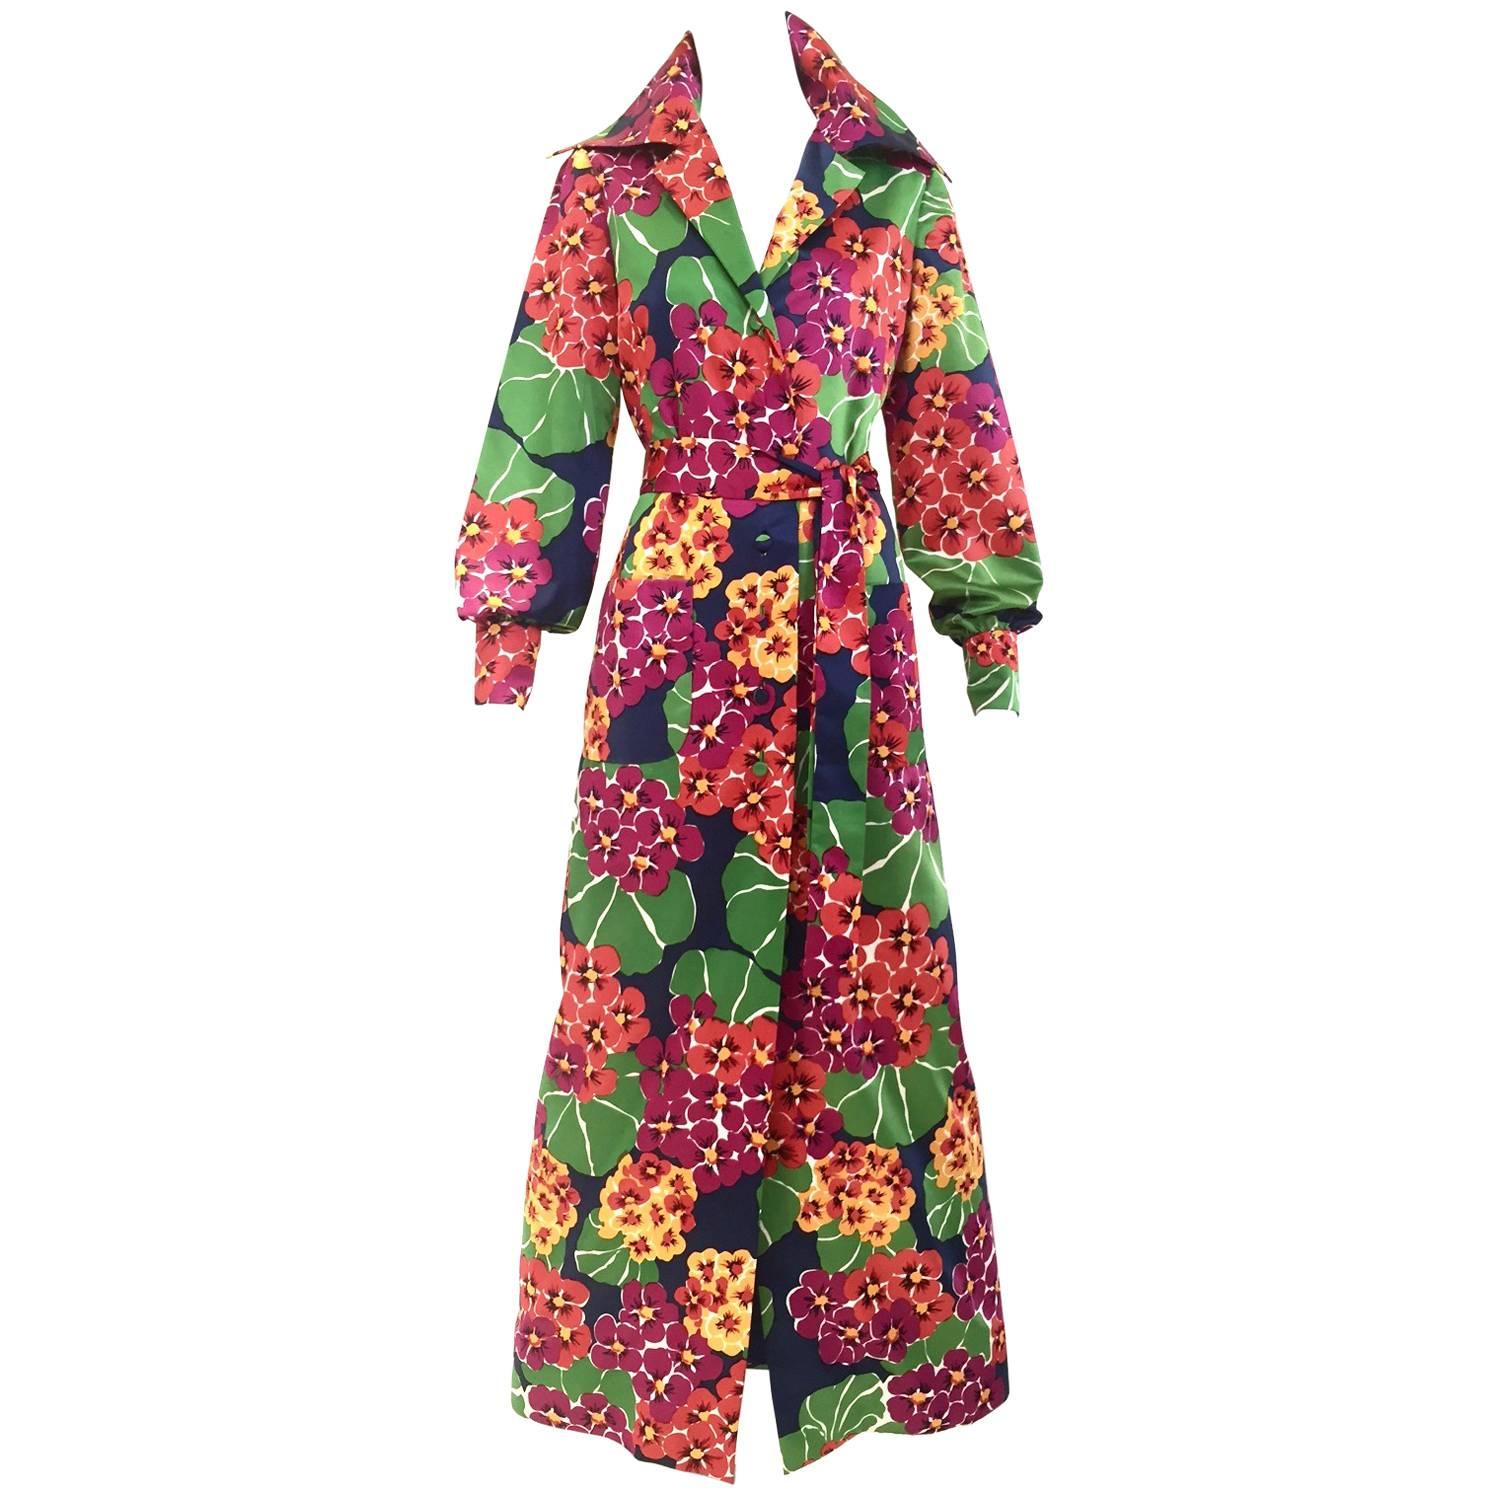 1970s Geoffrey Beene vibrant floral print silk shirt maxi dress